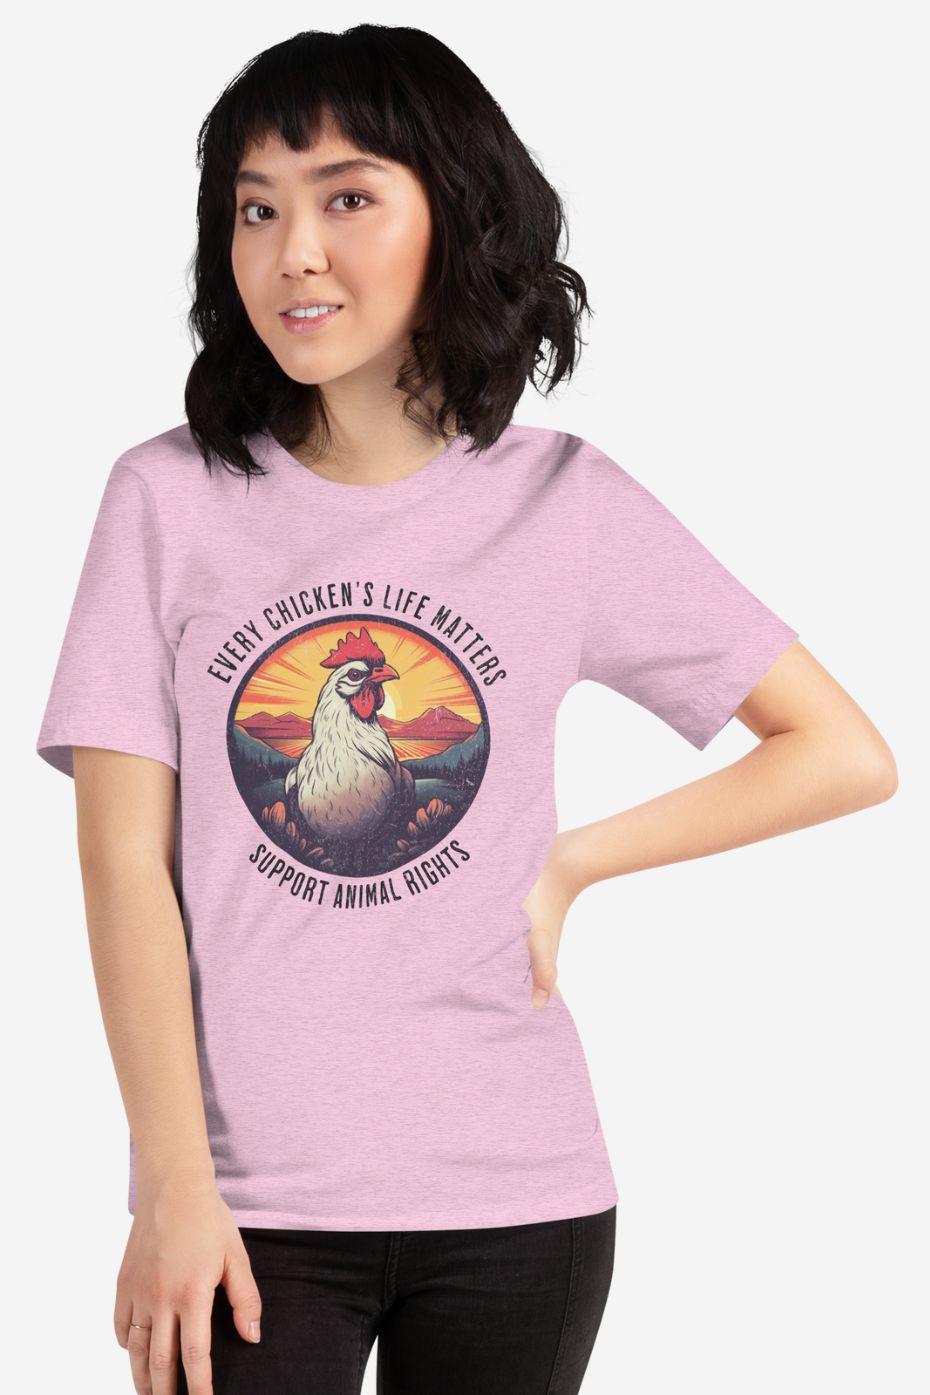 Every Chicken's Life Matters - Unisex t-shirt